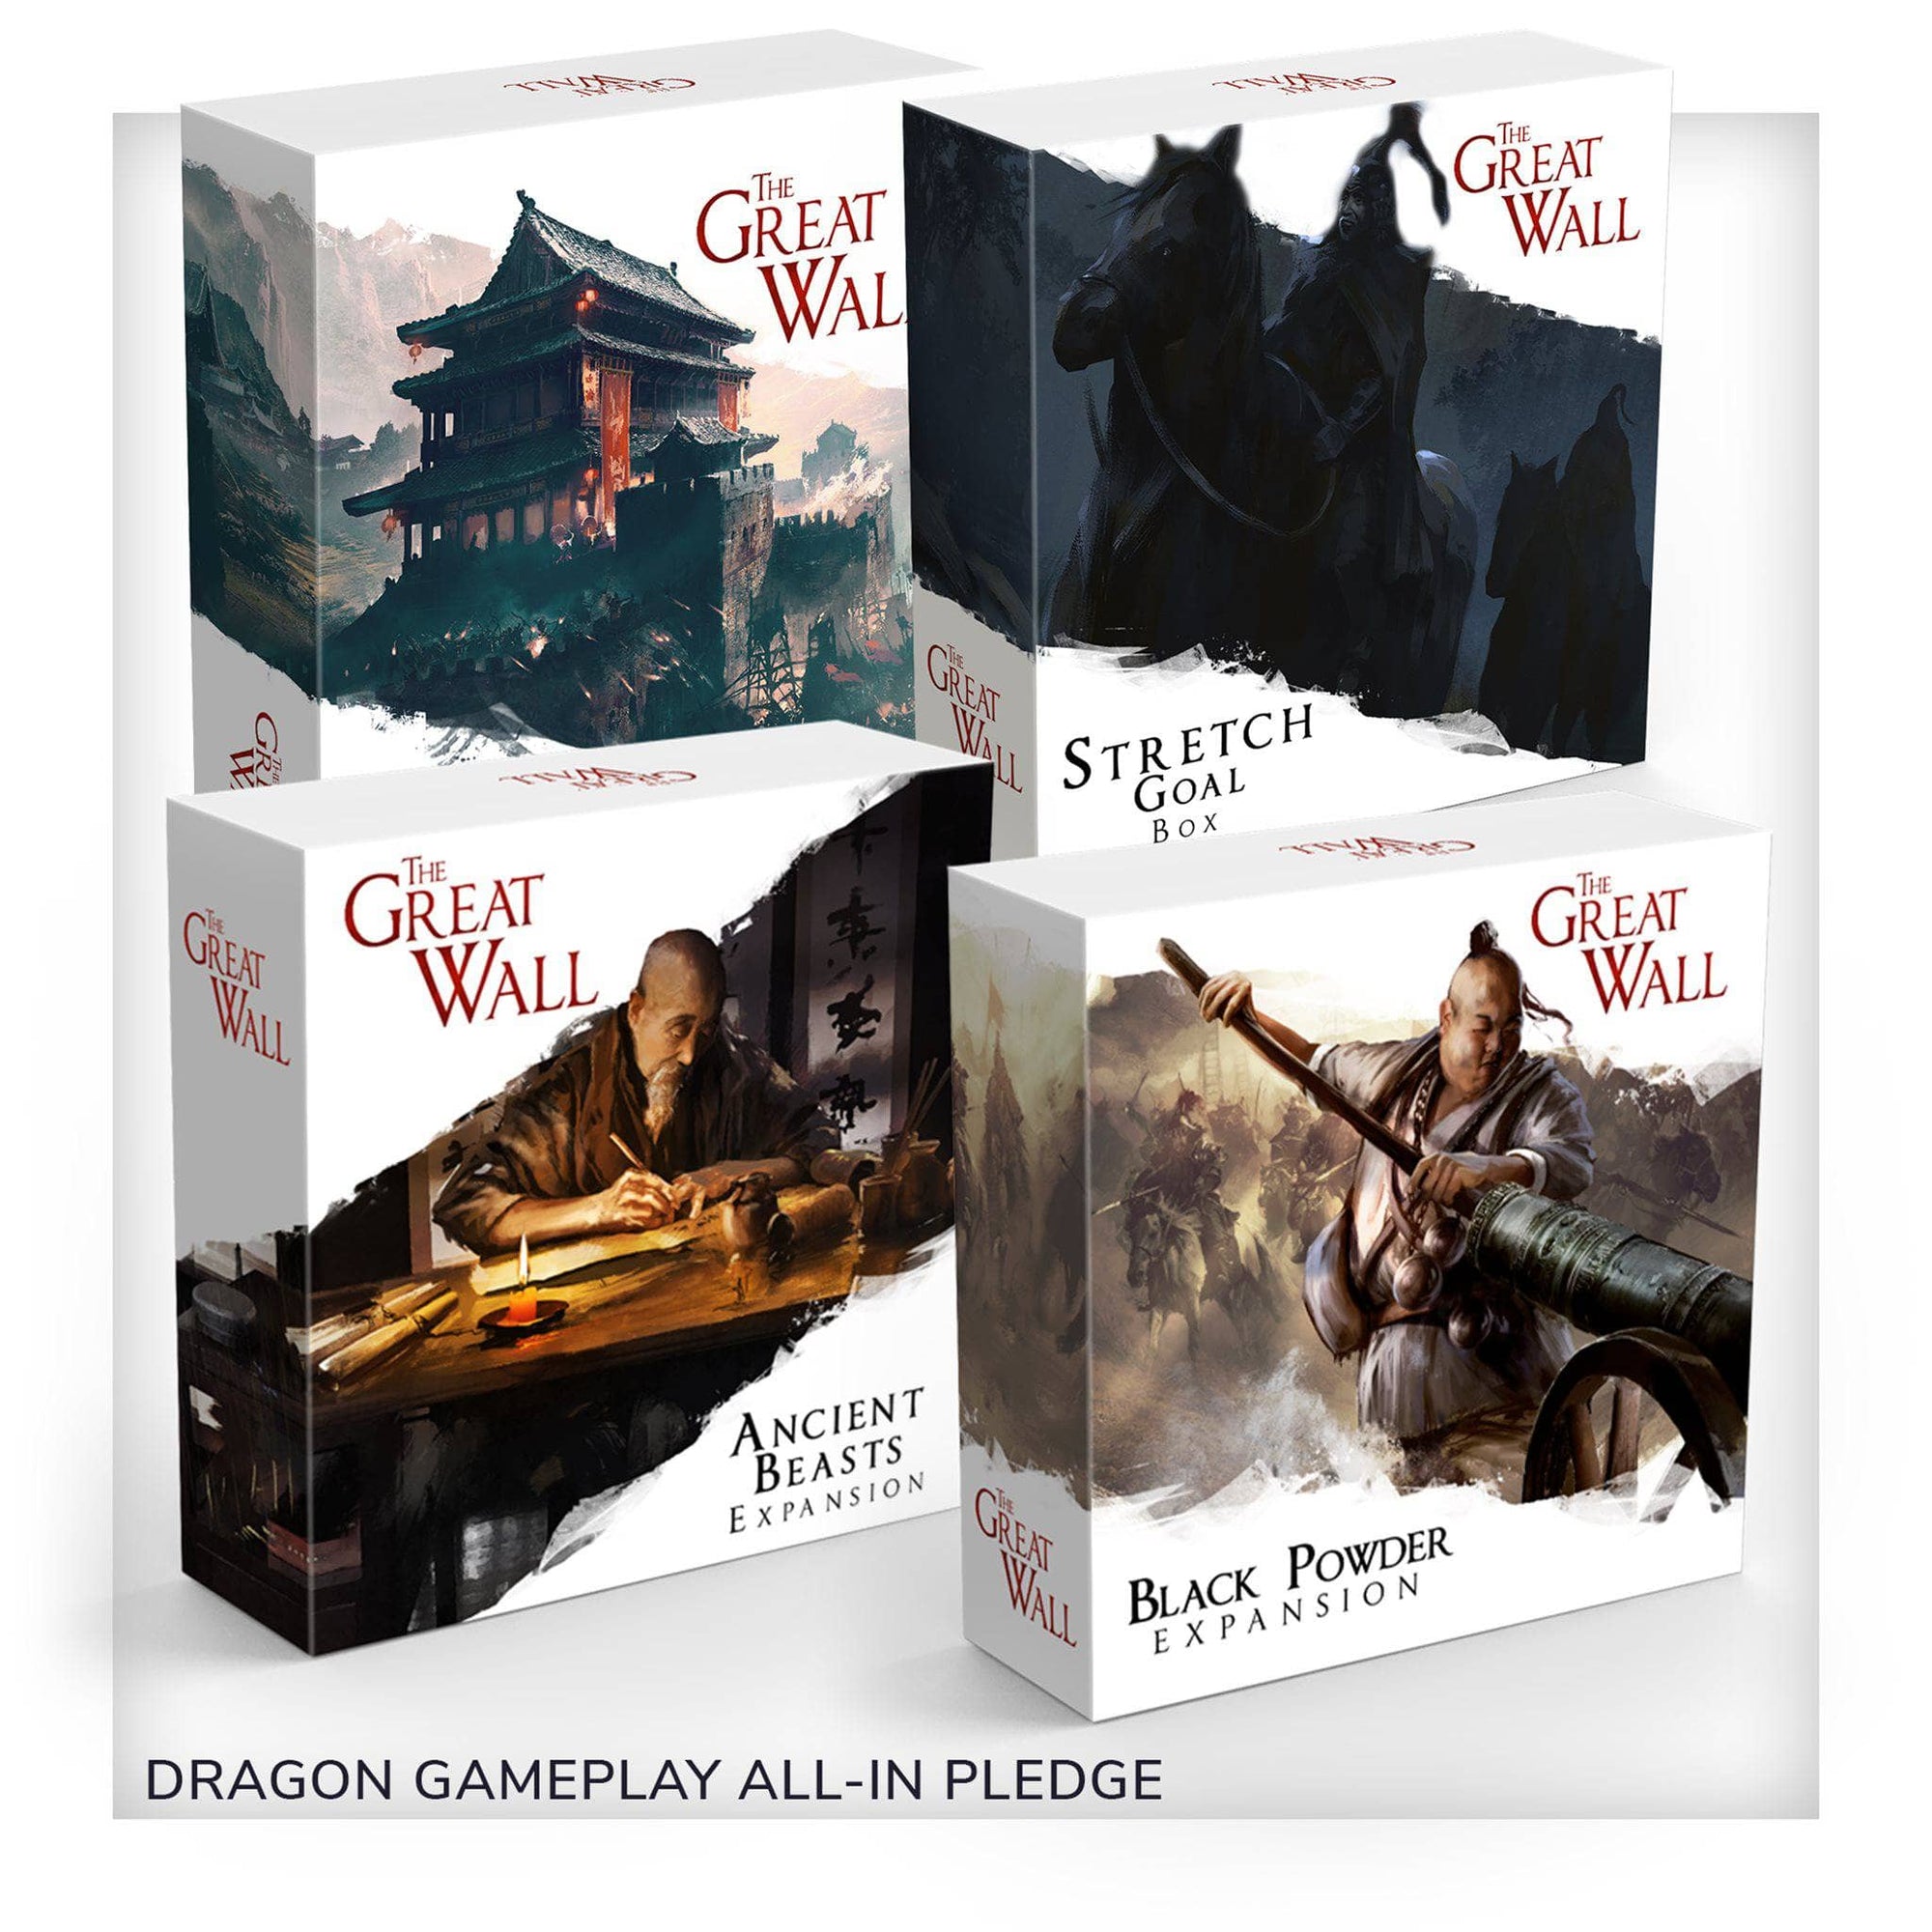 Suuri seinä: Tiger Gameplay All-In Pledge Plus Deluxe Meeples (Kickstarter Special)